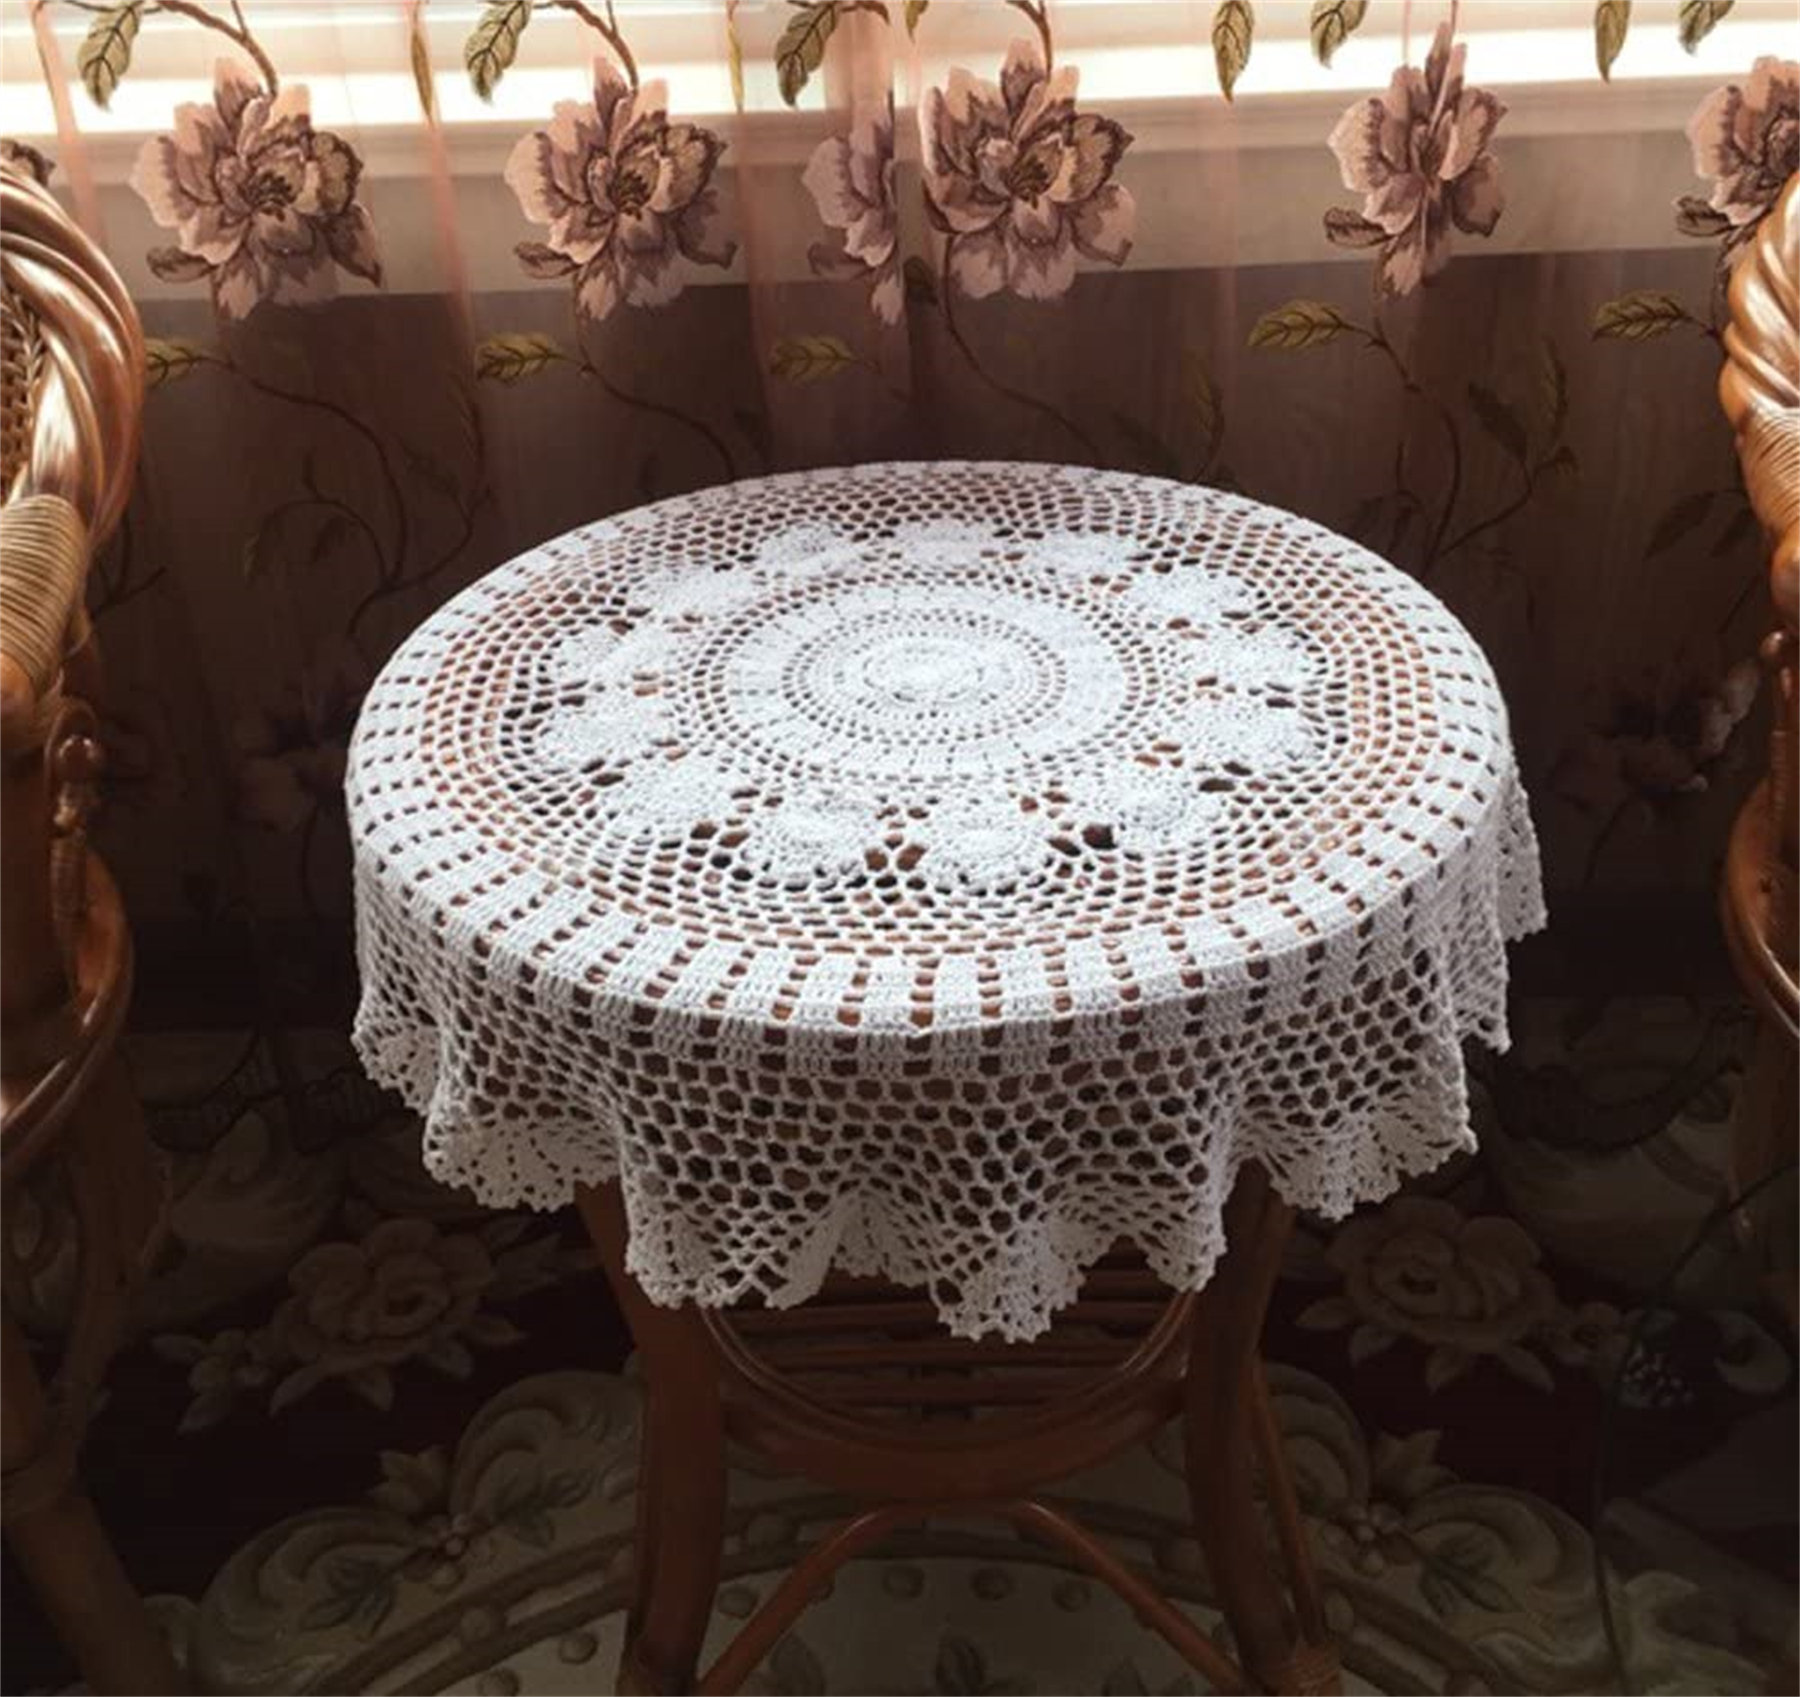 Vintage Cotton Hand Crochet Lace Table Runner Dresser Scarf Mats Doilies 19"x31" 